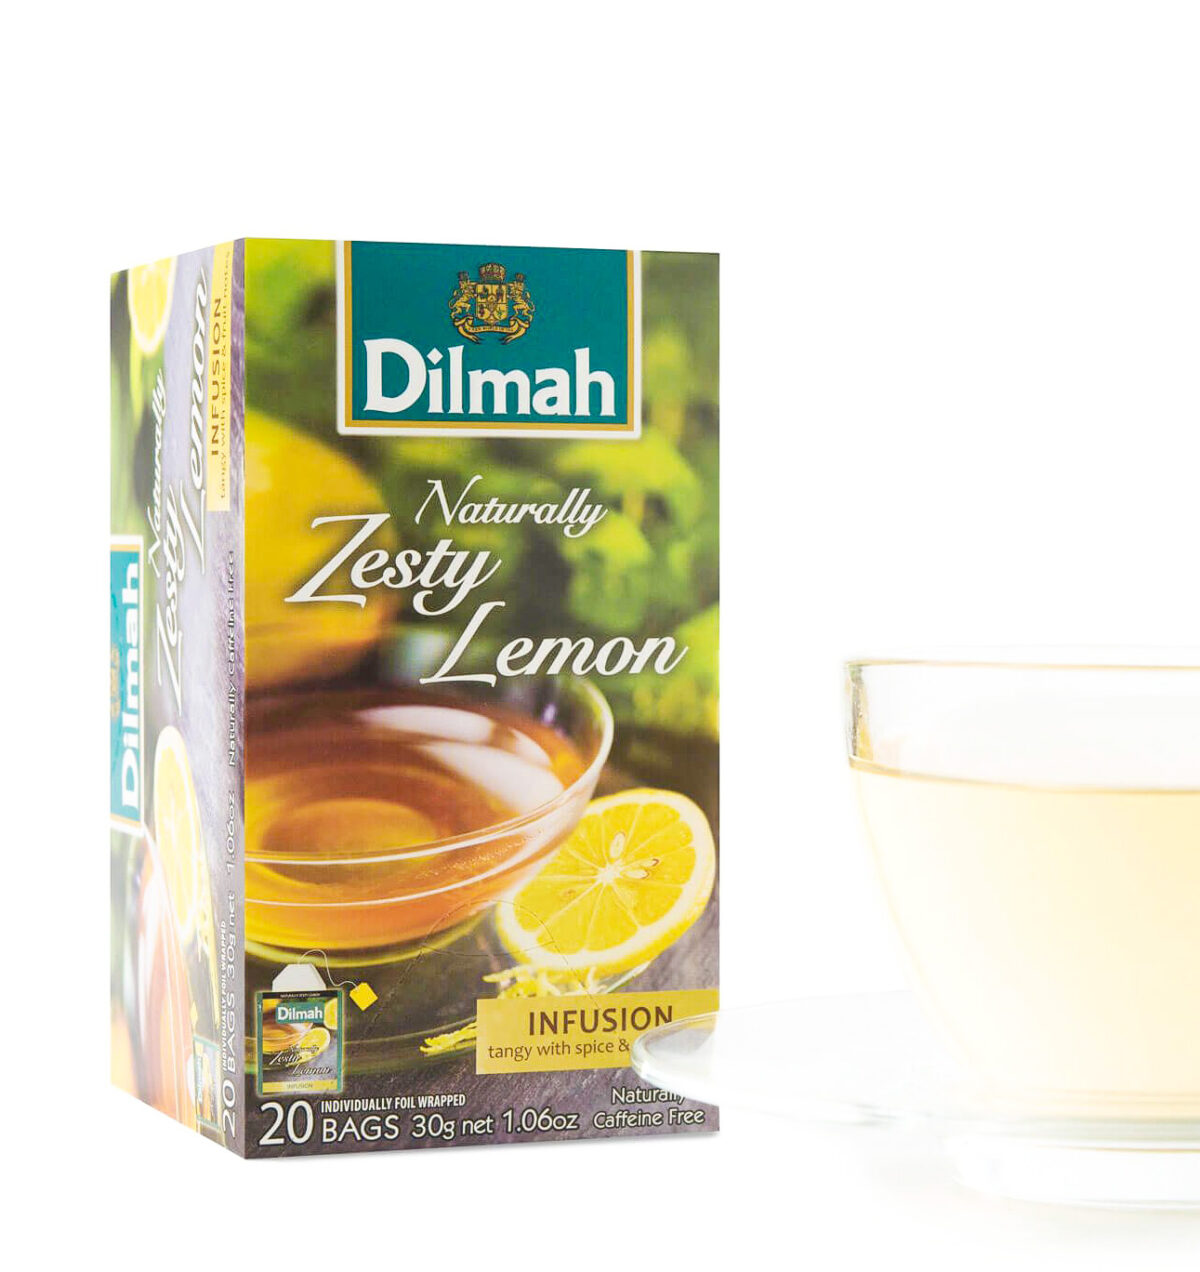 Dilmah Naturally Zesty Lemon flavored ceylon black tea